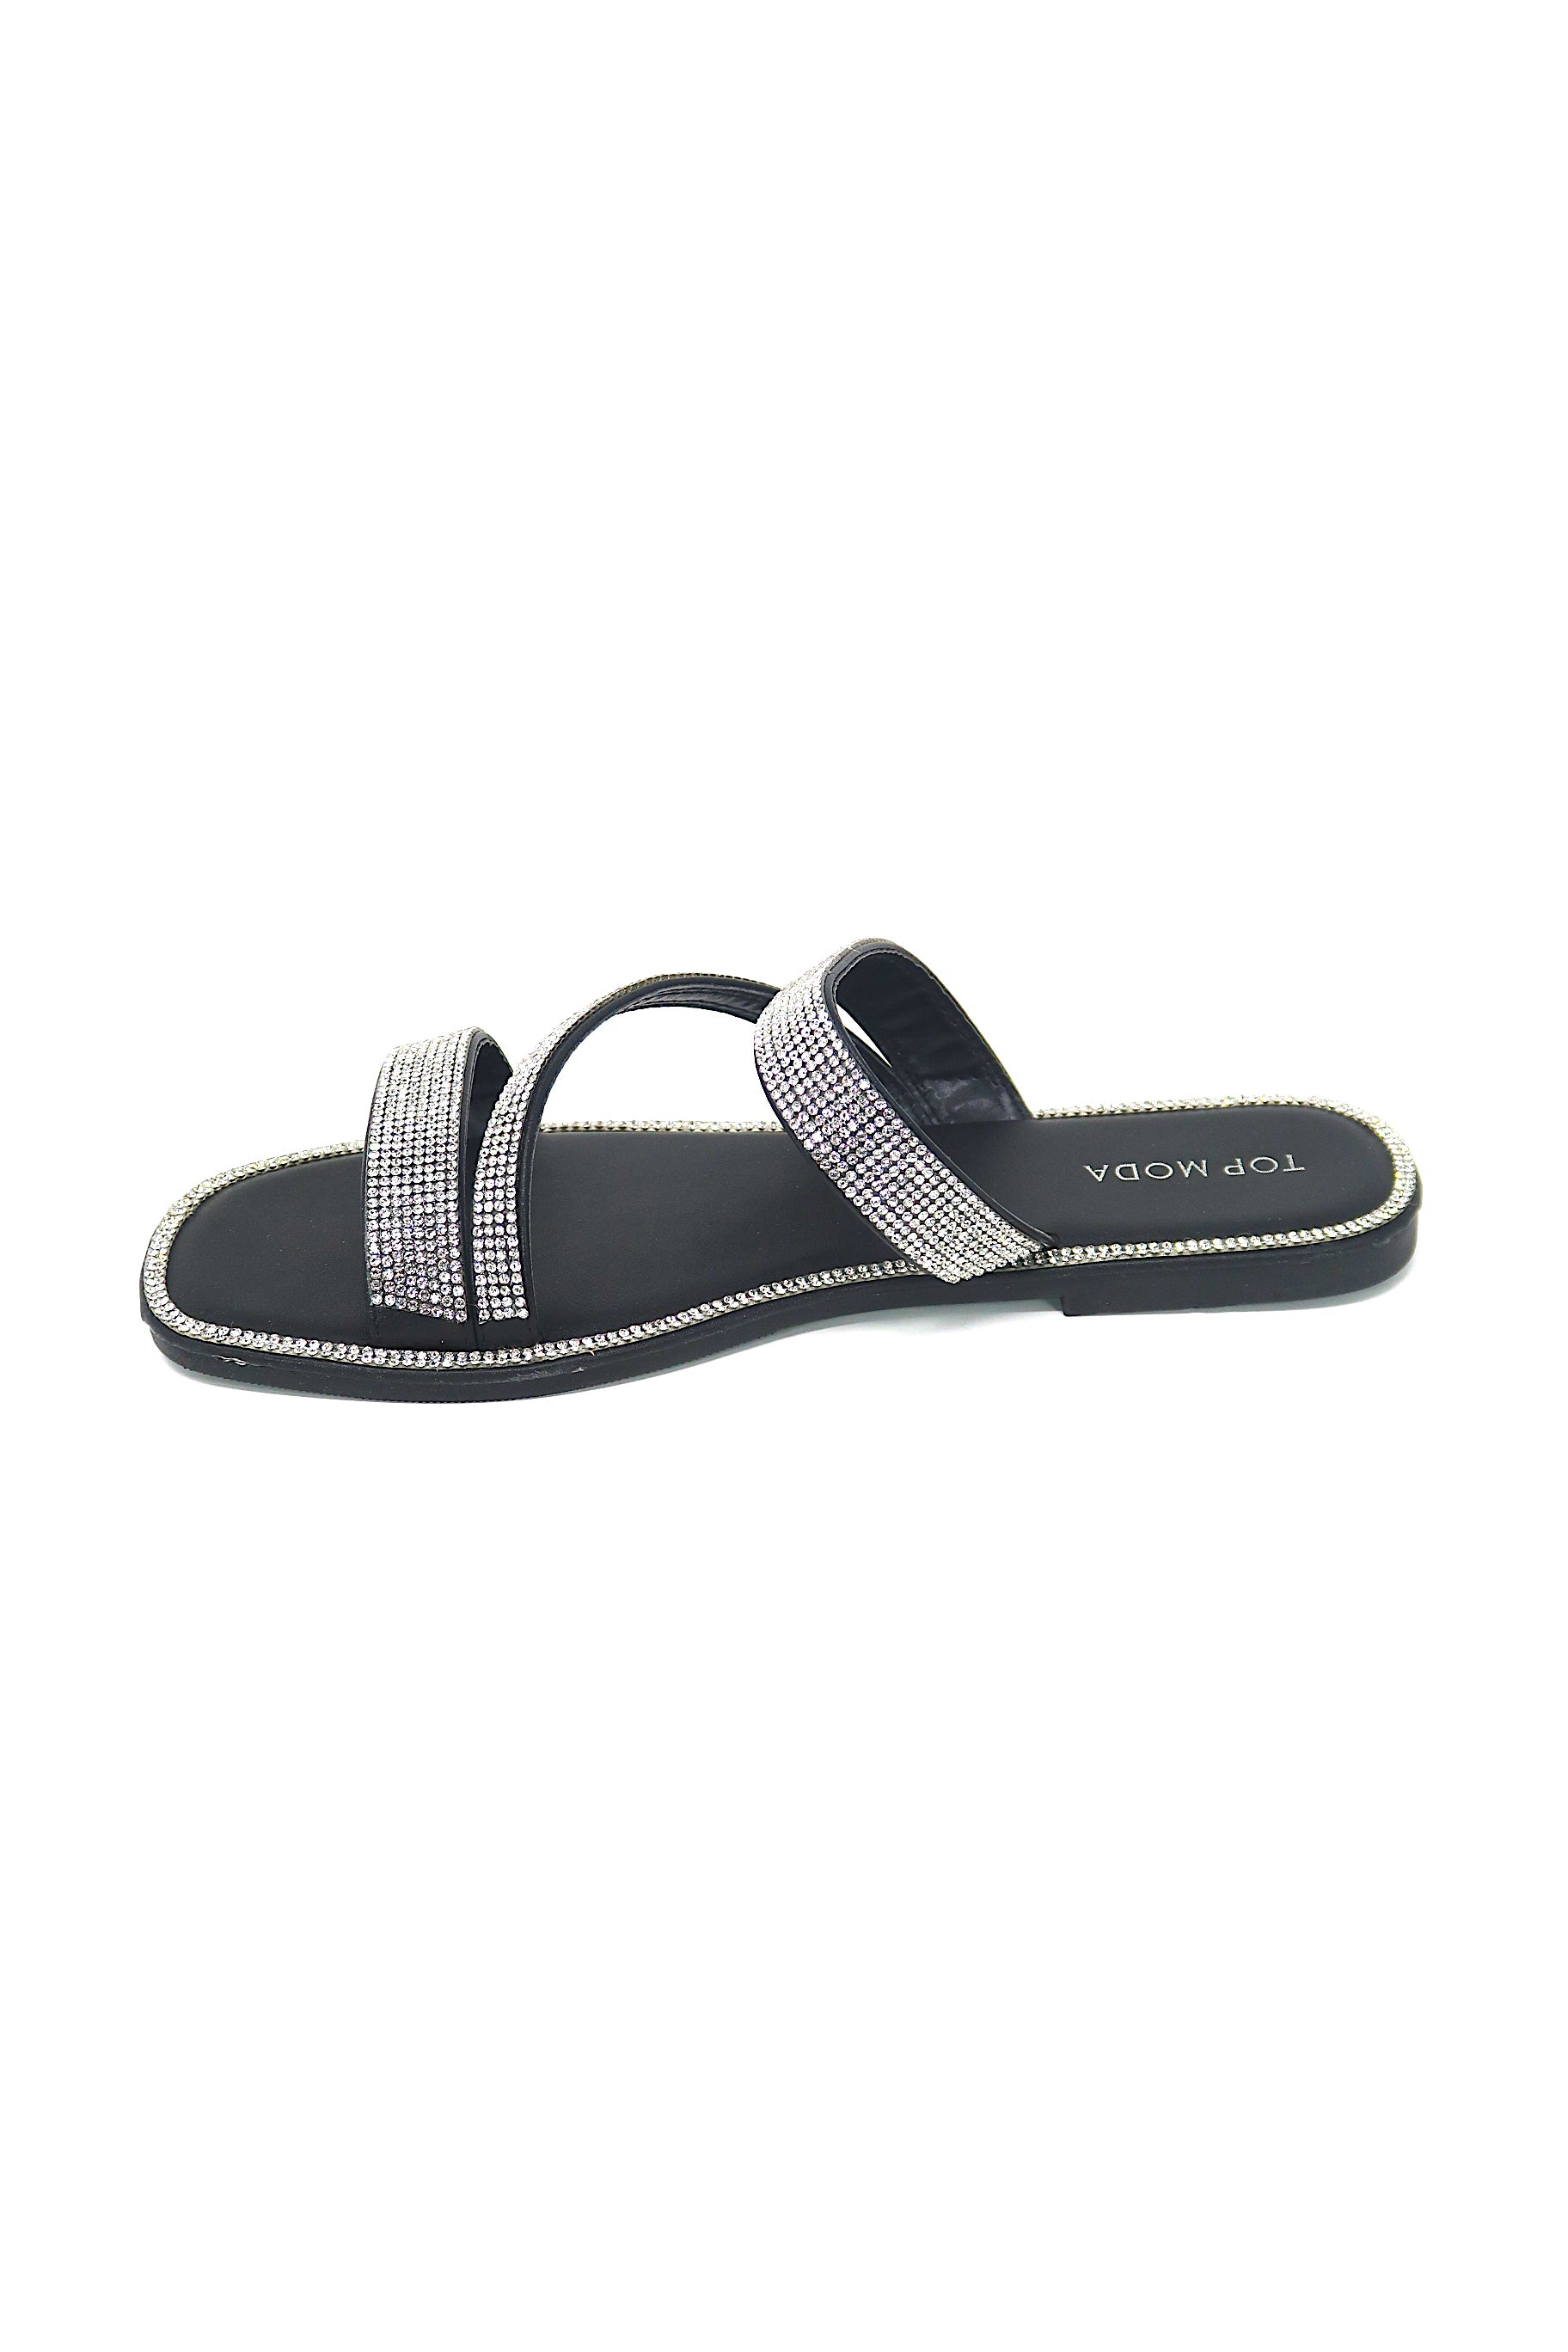 Womens Sandals Flat Roman Flower Boho Casual Sandals Slippers Beach Shoes  Size | eBay